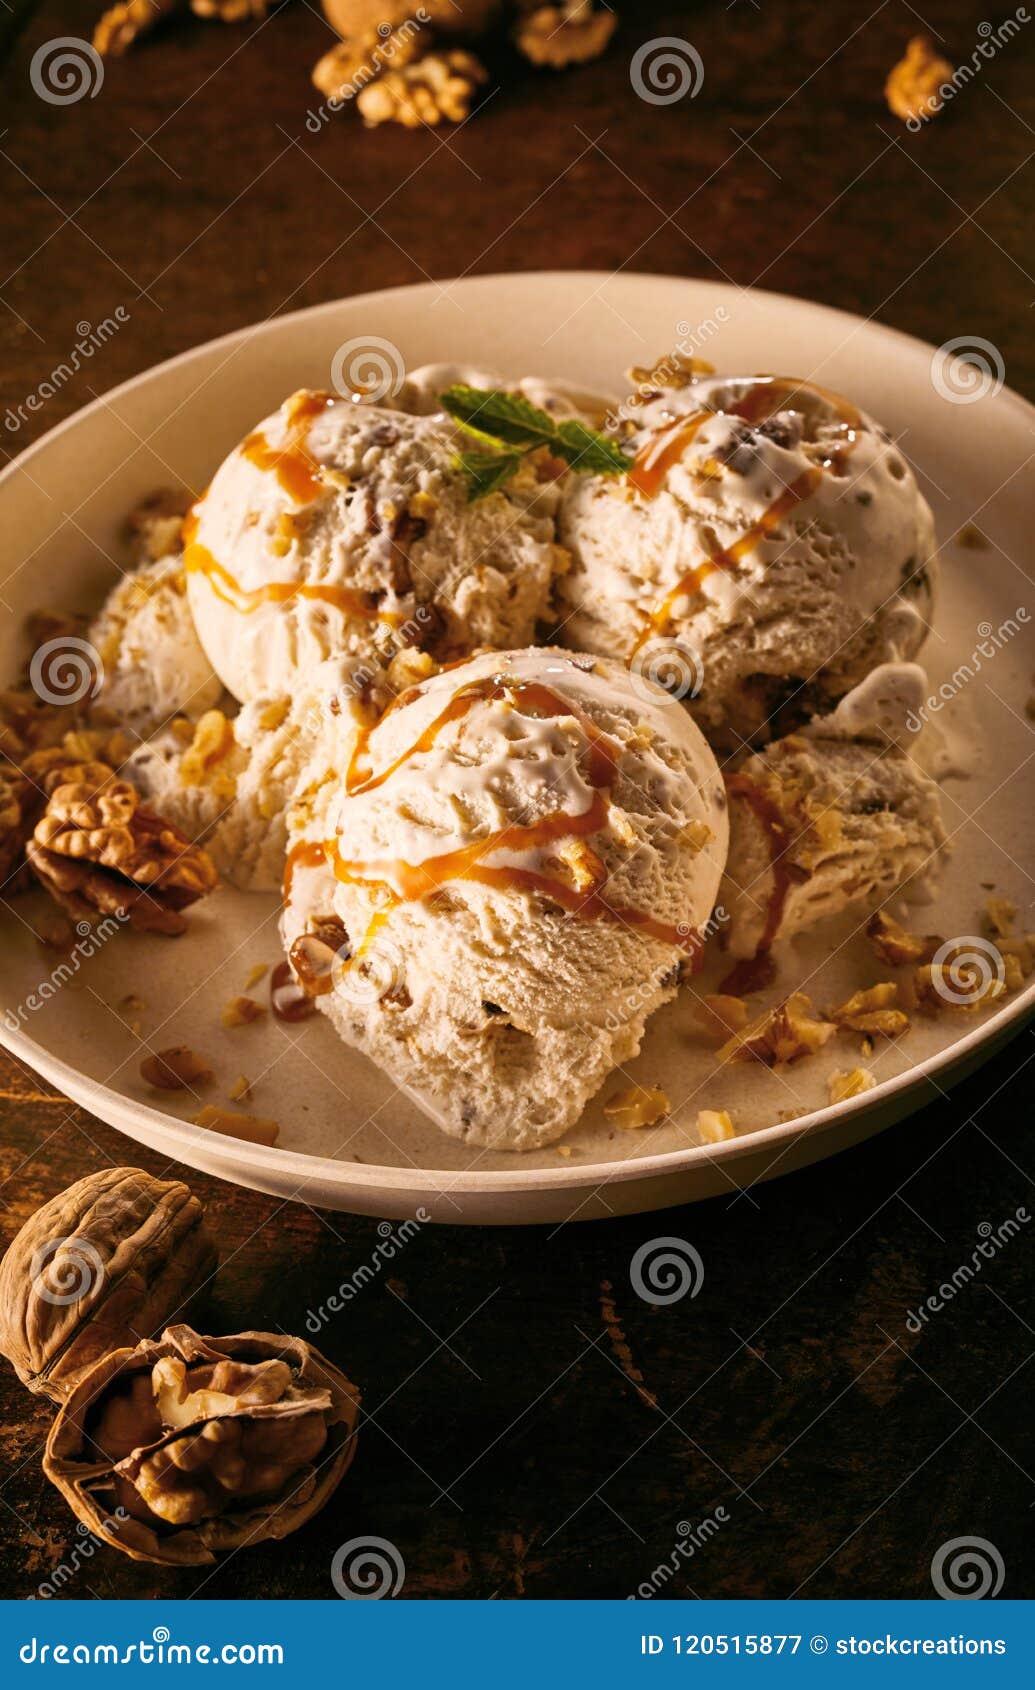 Maple Walnut Ice Cream With Caramel Sauce In Bowl Stock Image Image Of Dark Ingredients 120515877